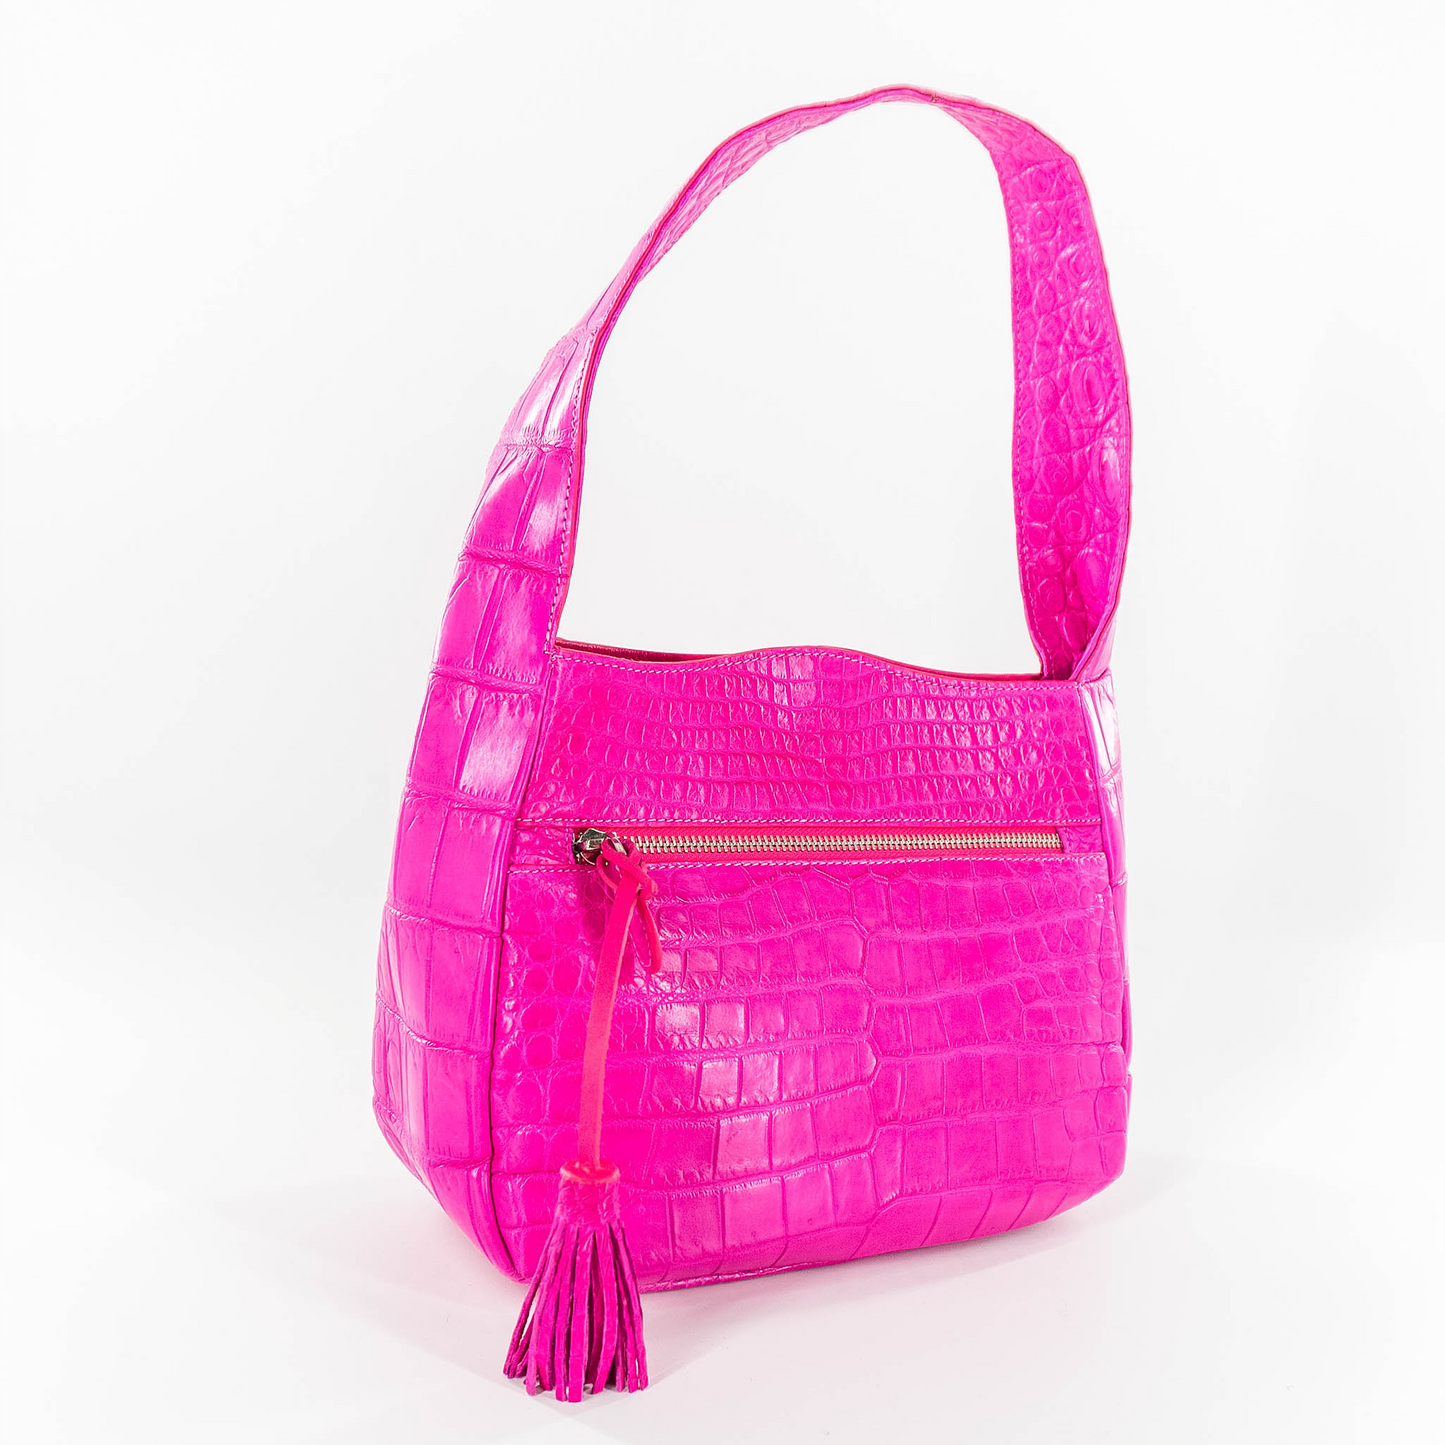 One Handle Handbag in Matte Pink Crocodile Belly Skin